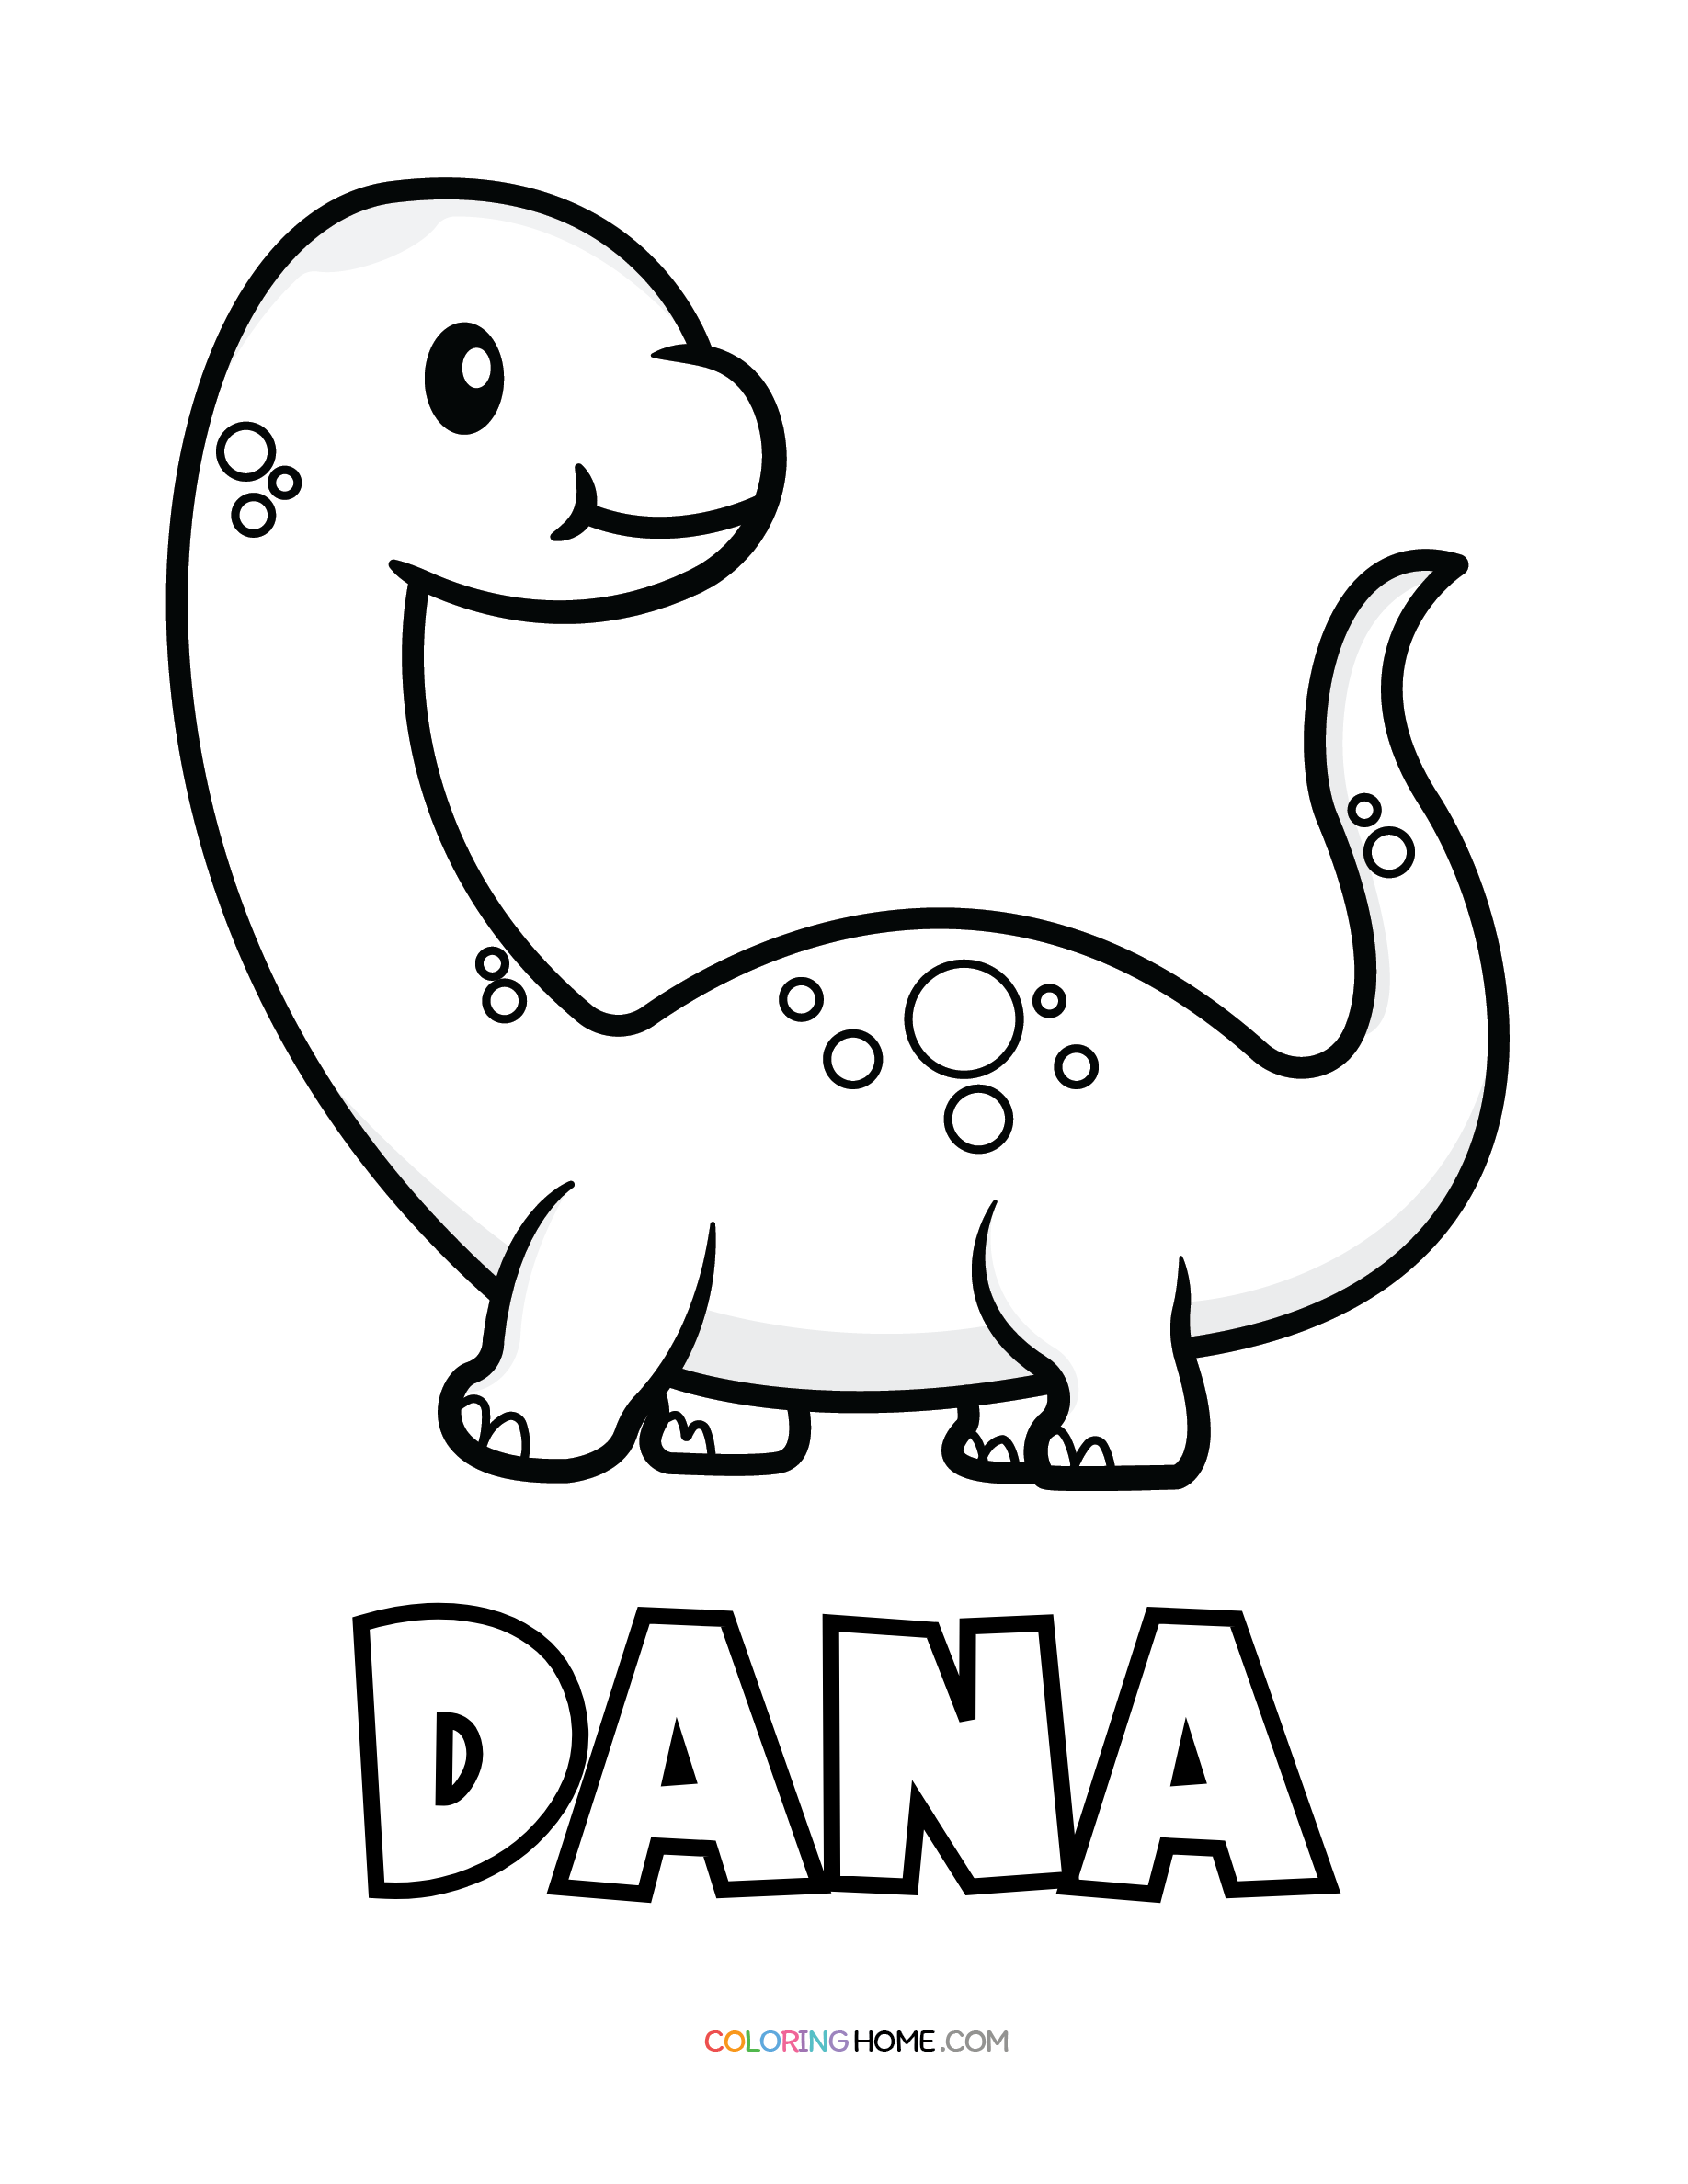 Dana dinosaur coloring page